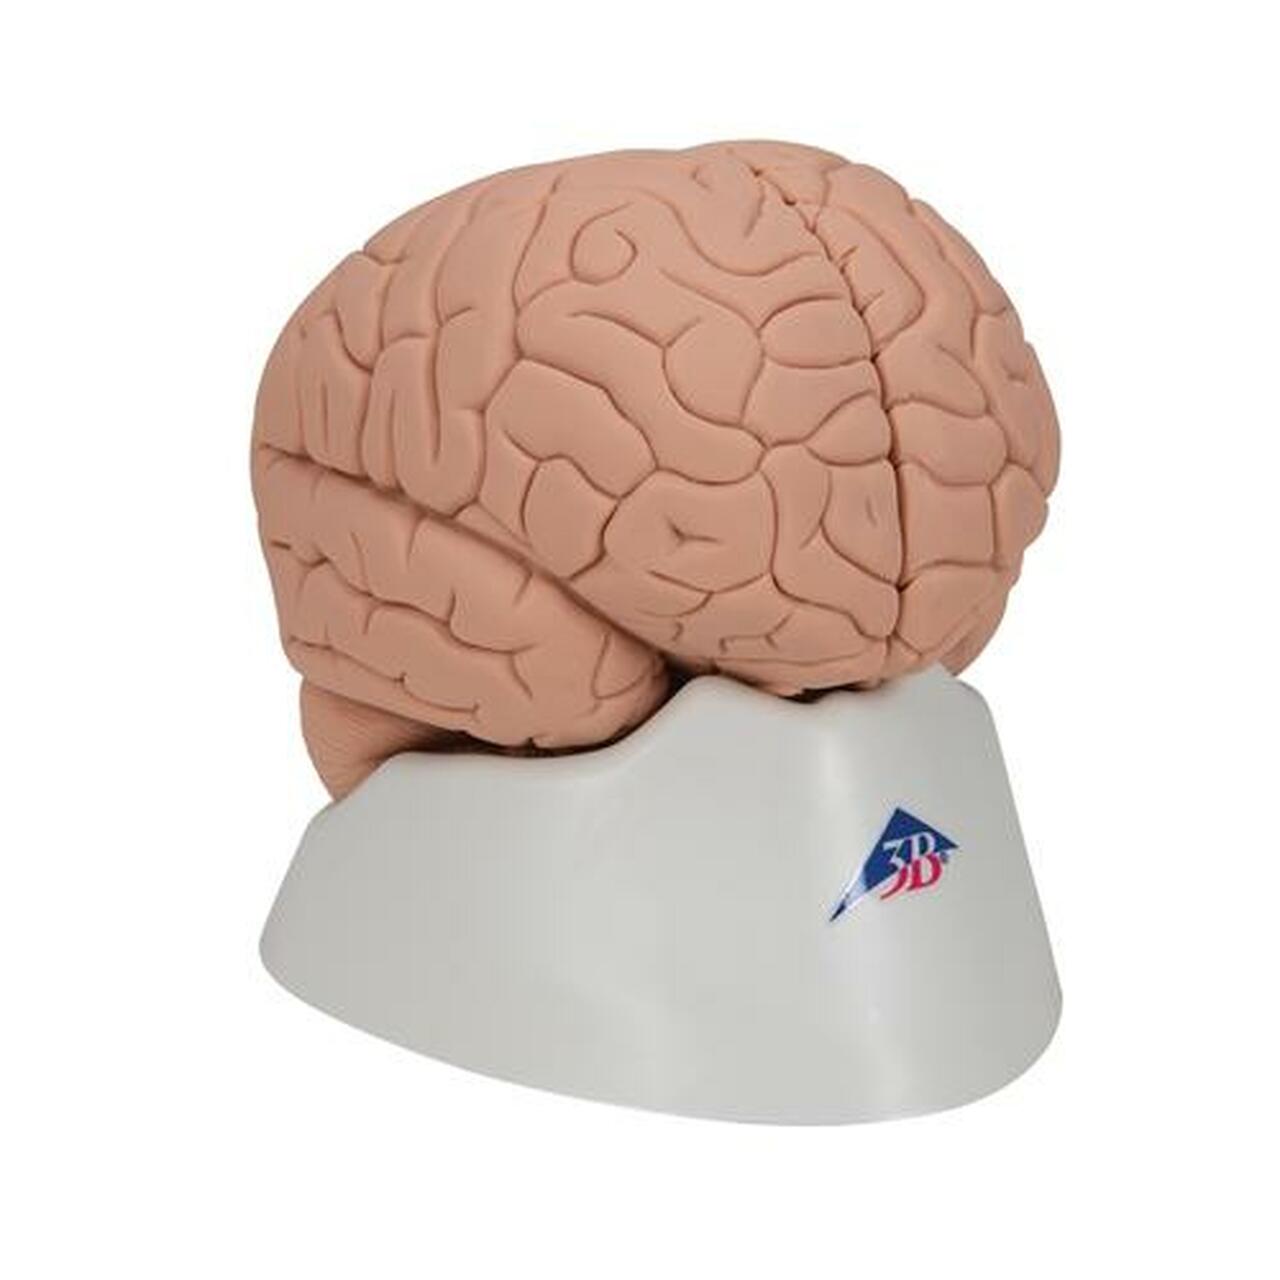 C15 Human Brain Model, 2 part - 3B Smart Anatomy